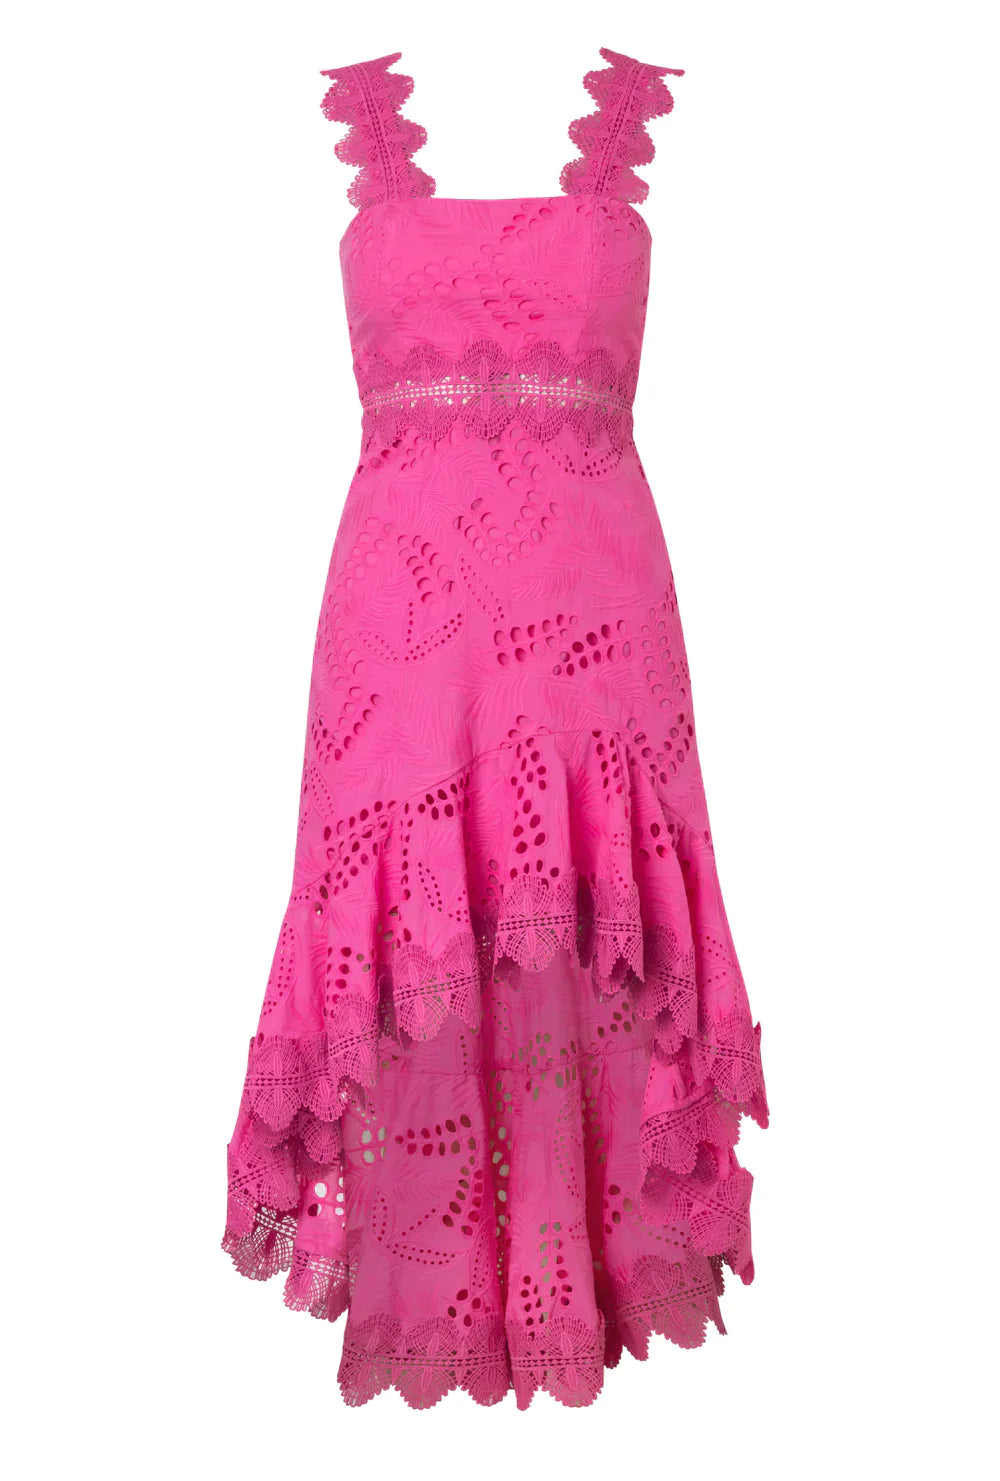 Waimari Jackie Dress Fuchsia - Premium Long dress from Marina St Barth - Just $350! Shop now at Marina St Barth